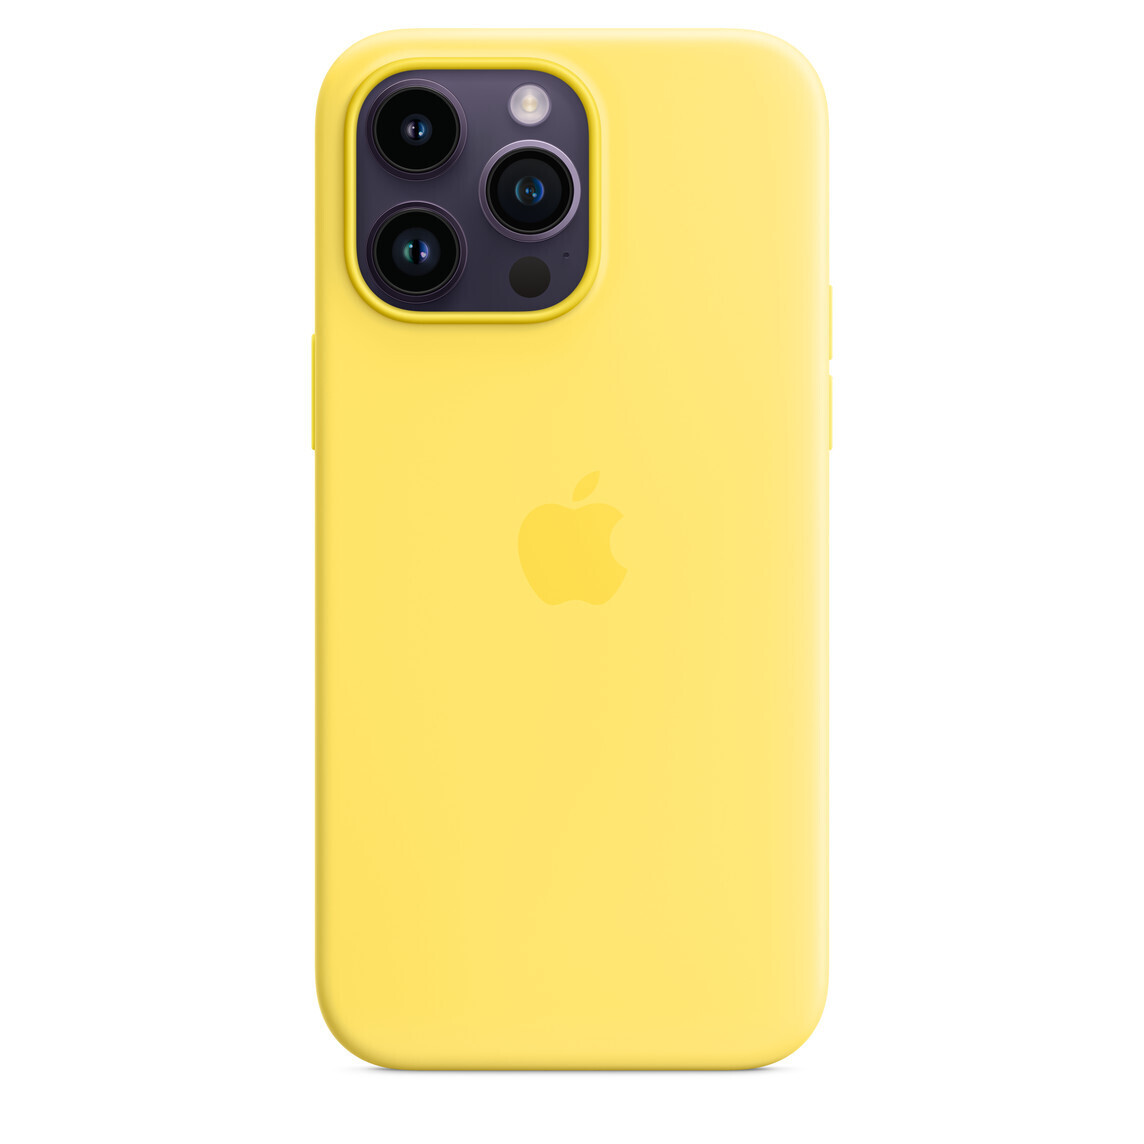  گارد سیلیکونی آیفون 11 پرو رنگ زرد 